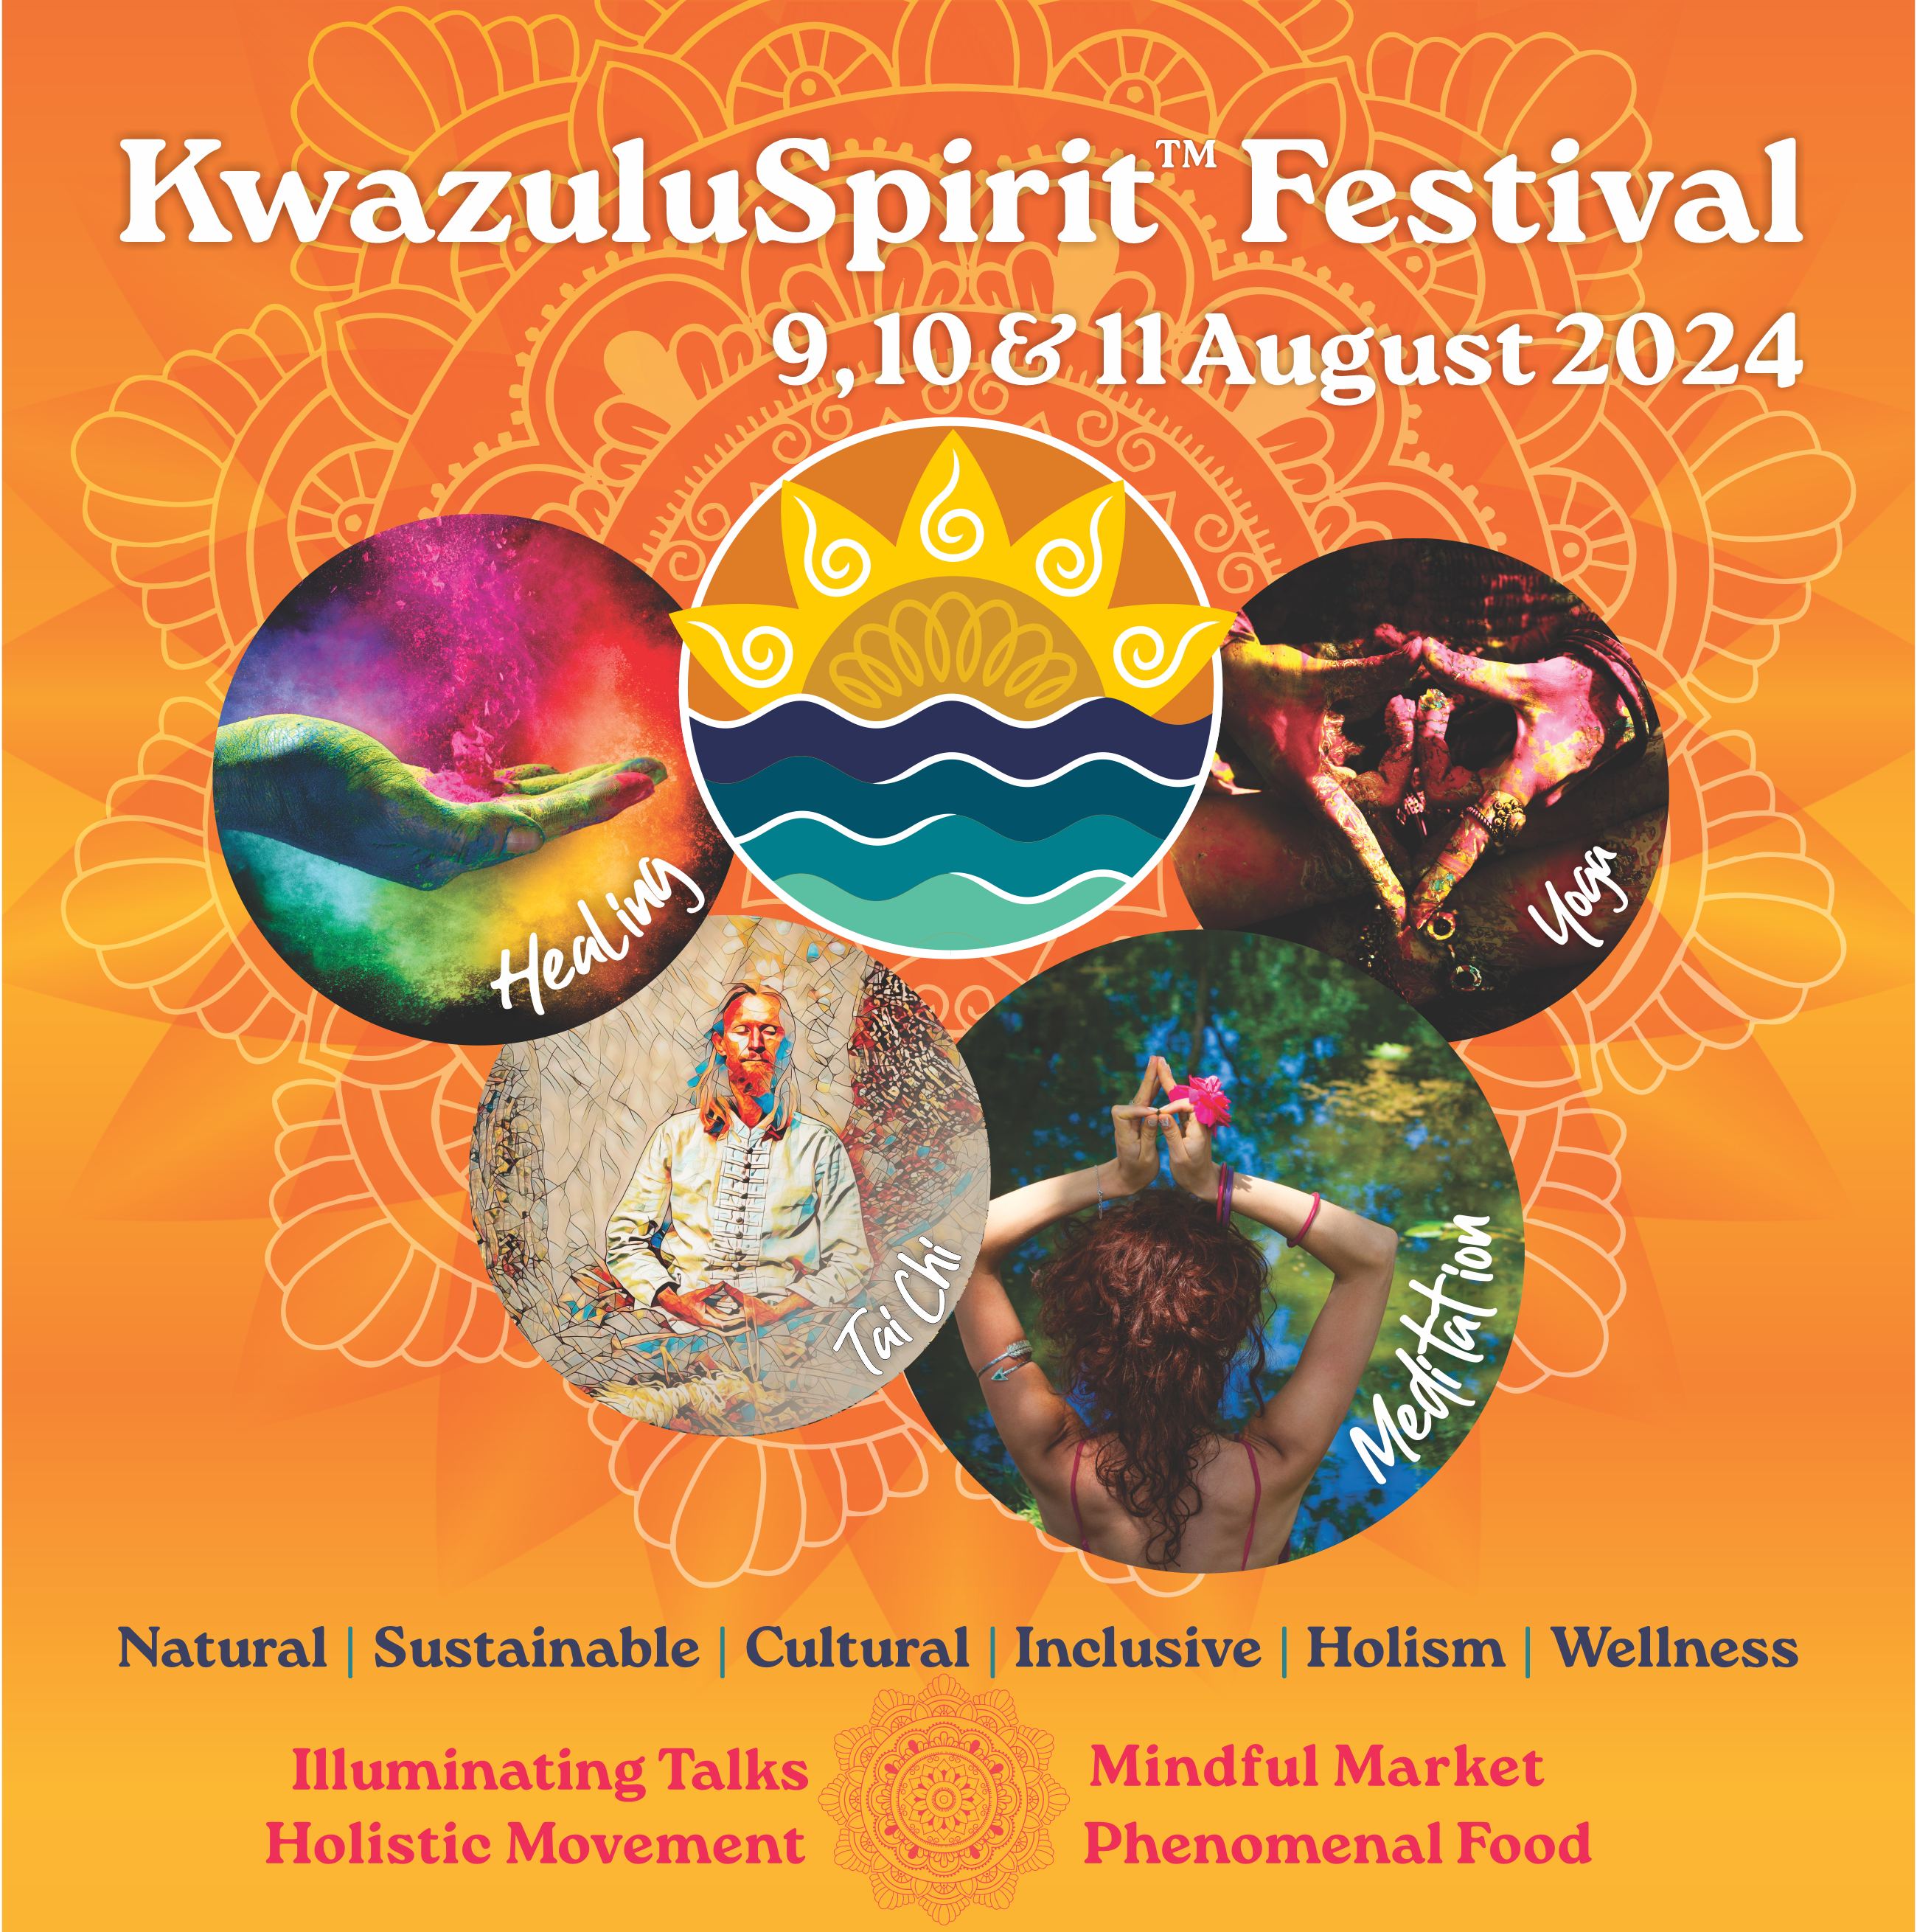 Kwazuluspirit Festival Sprirt fest 2024